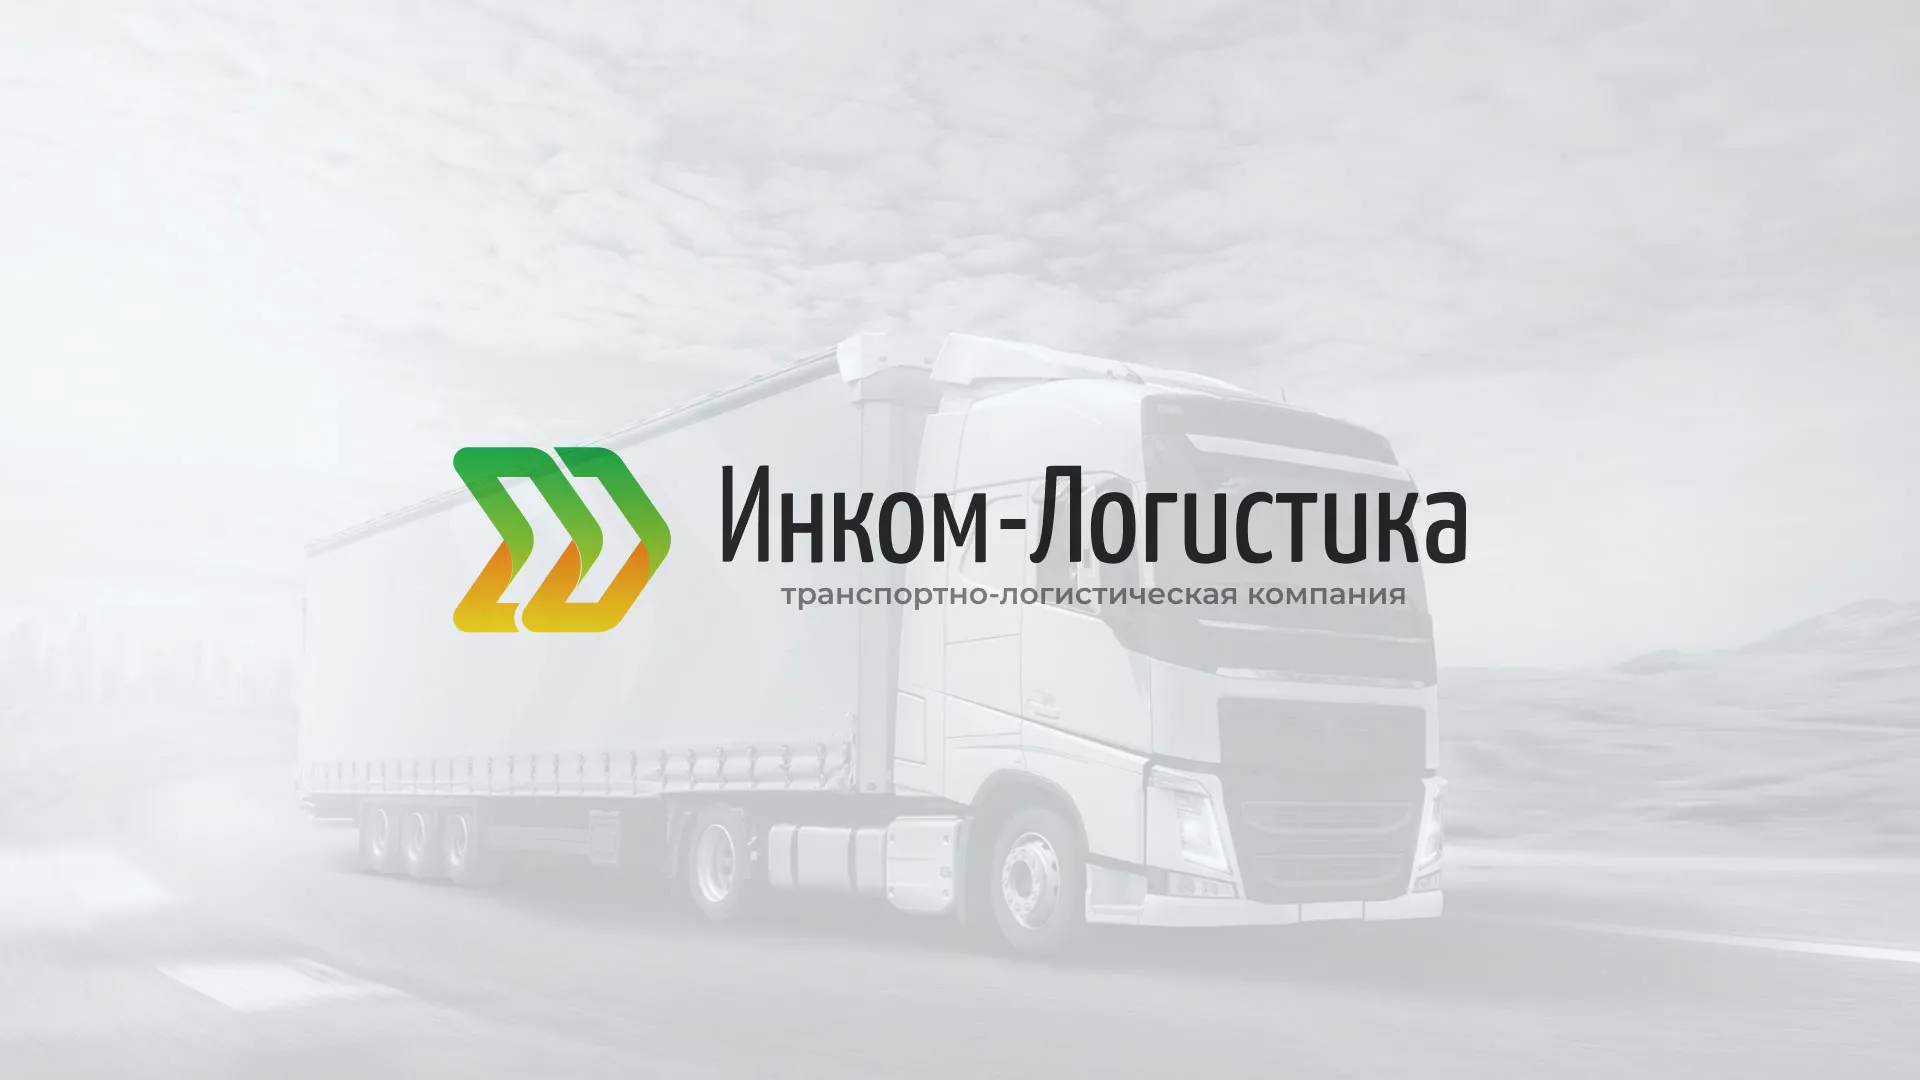 Разработка логотипа и сайта компании «Инком-Логистика» в Улане-Удэ